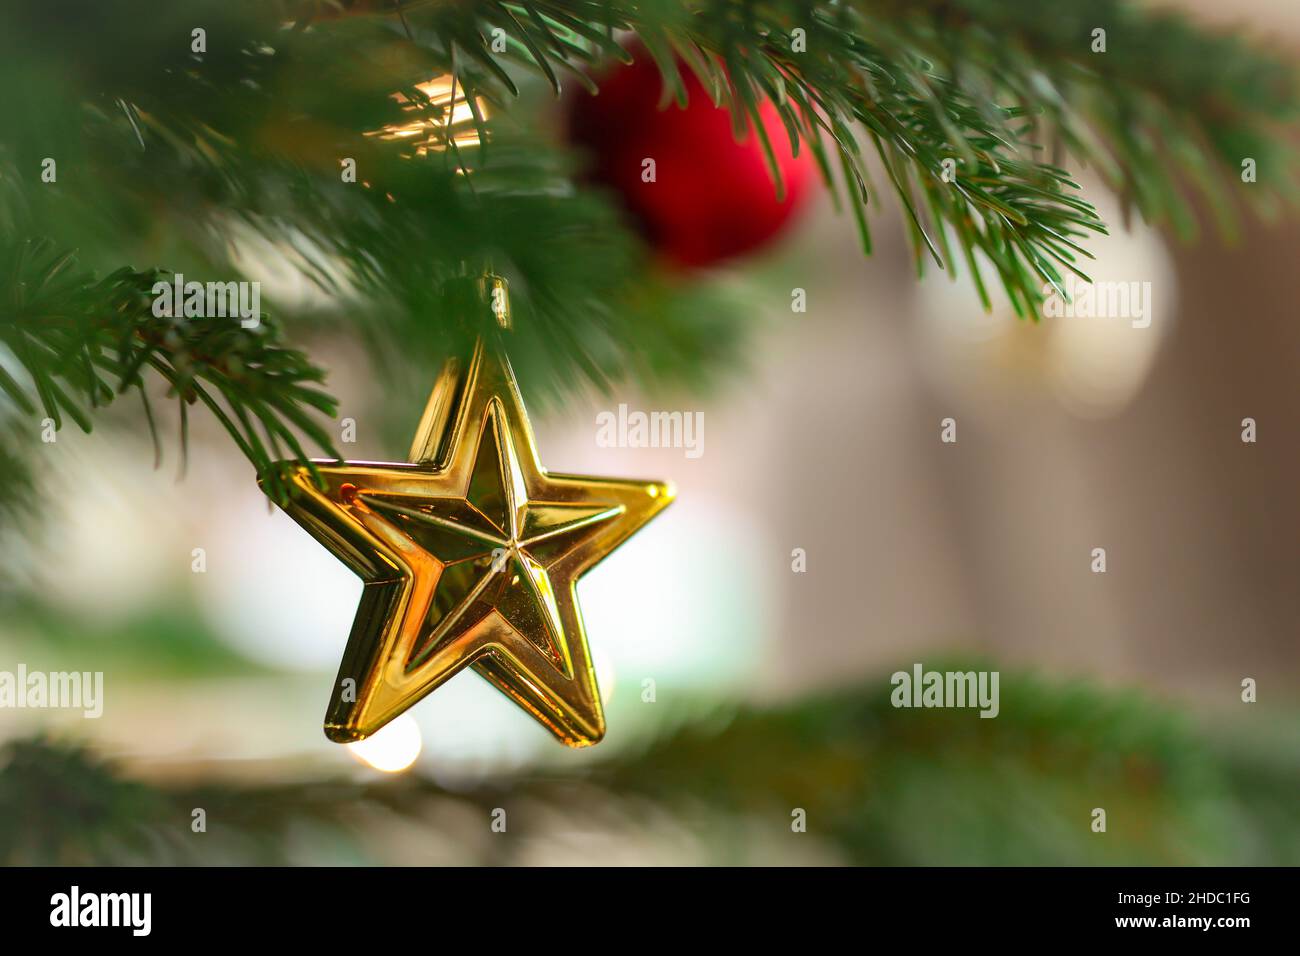 Beautiful Hanging Christmas Ornament on Green Tree. Seasonal Decoration of Golden Star. Stock Photo